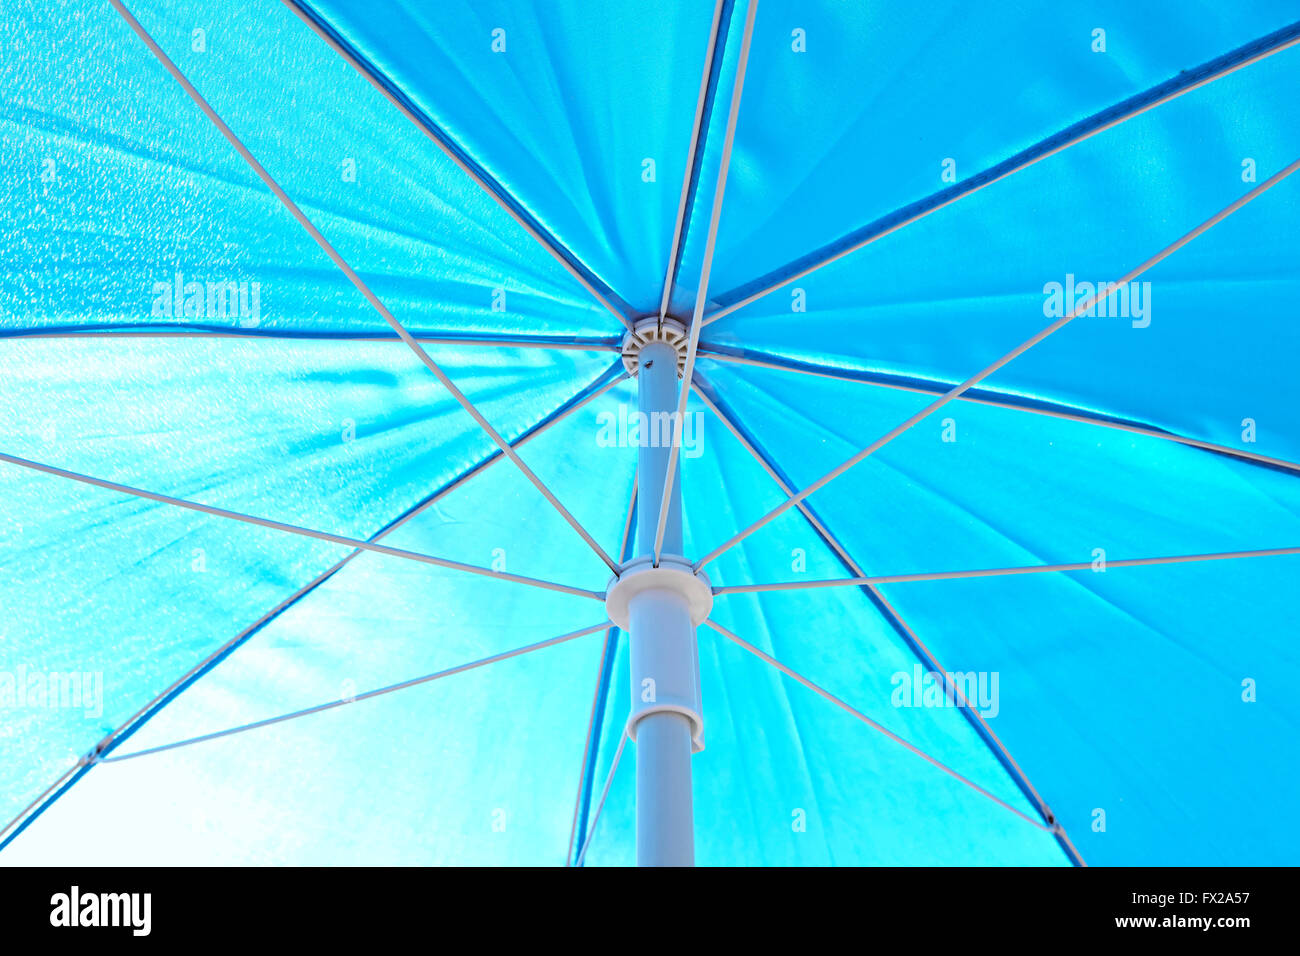 Under a blue sunblock umbrella Stock Photo